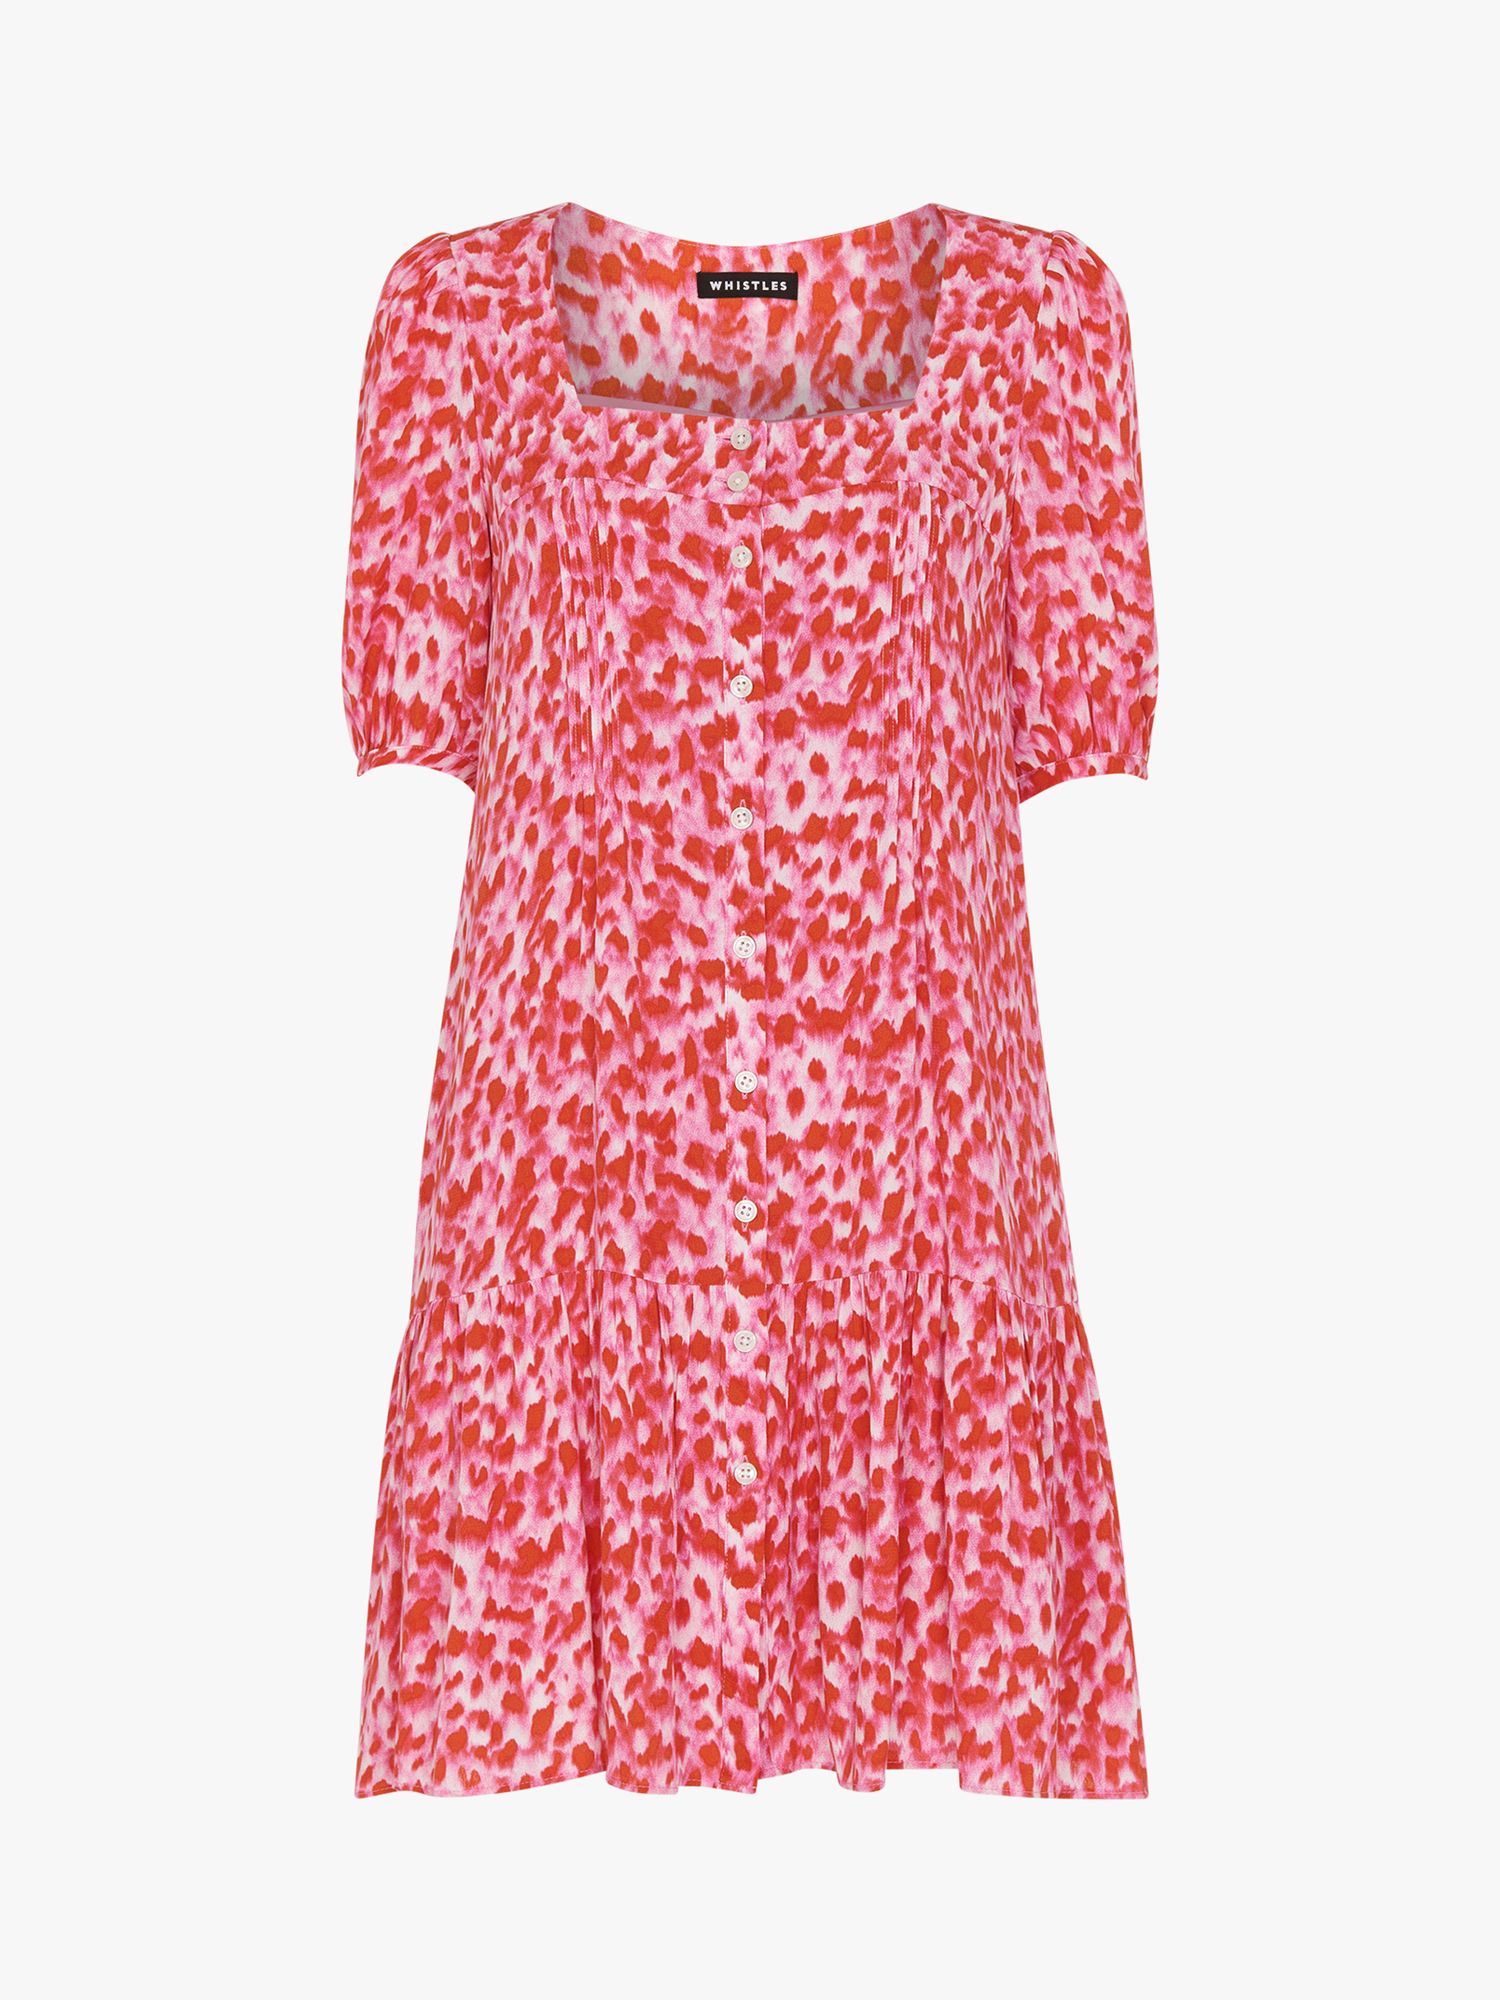 Whistles Blurred Strokes Flippy Dress, Pink/Multi at John Lewis & Partners